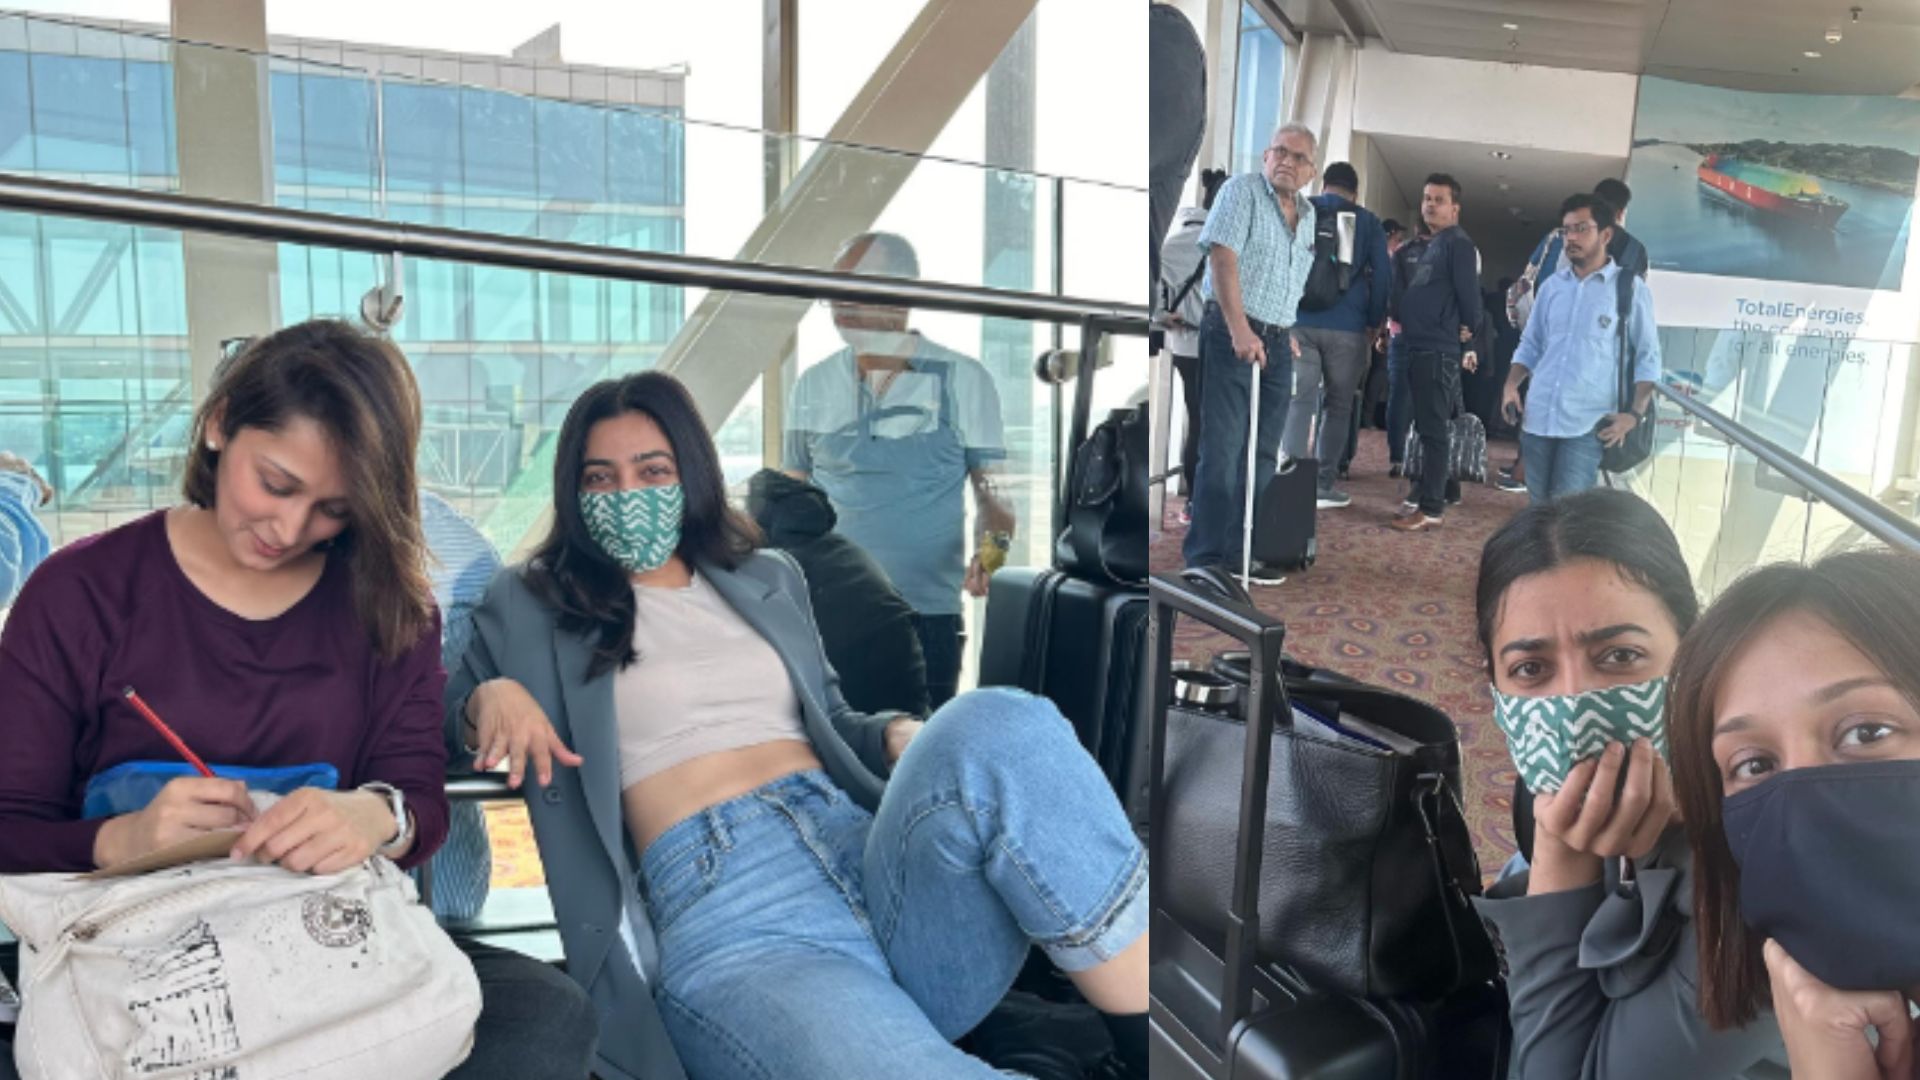 Actor Radhika Apte and Fellow Passengers Locked Inside Aerobridge Amid Flight Delay